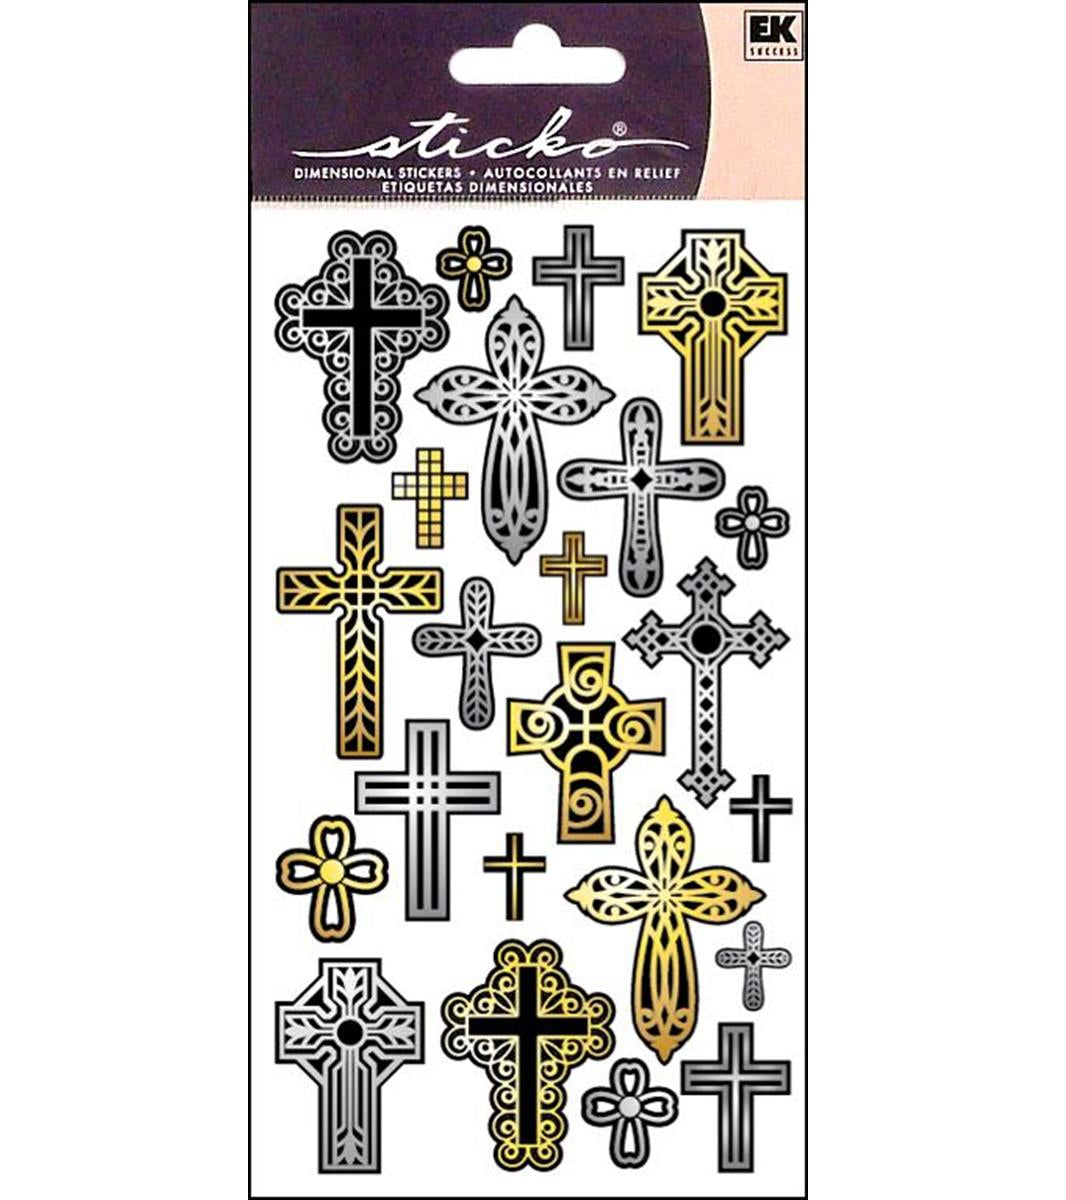 Cross Crosses Christian Celtic Catholic Silver Glitter Foam La Petites  Stickers